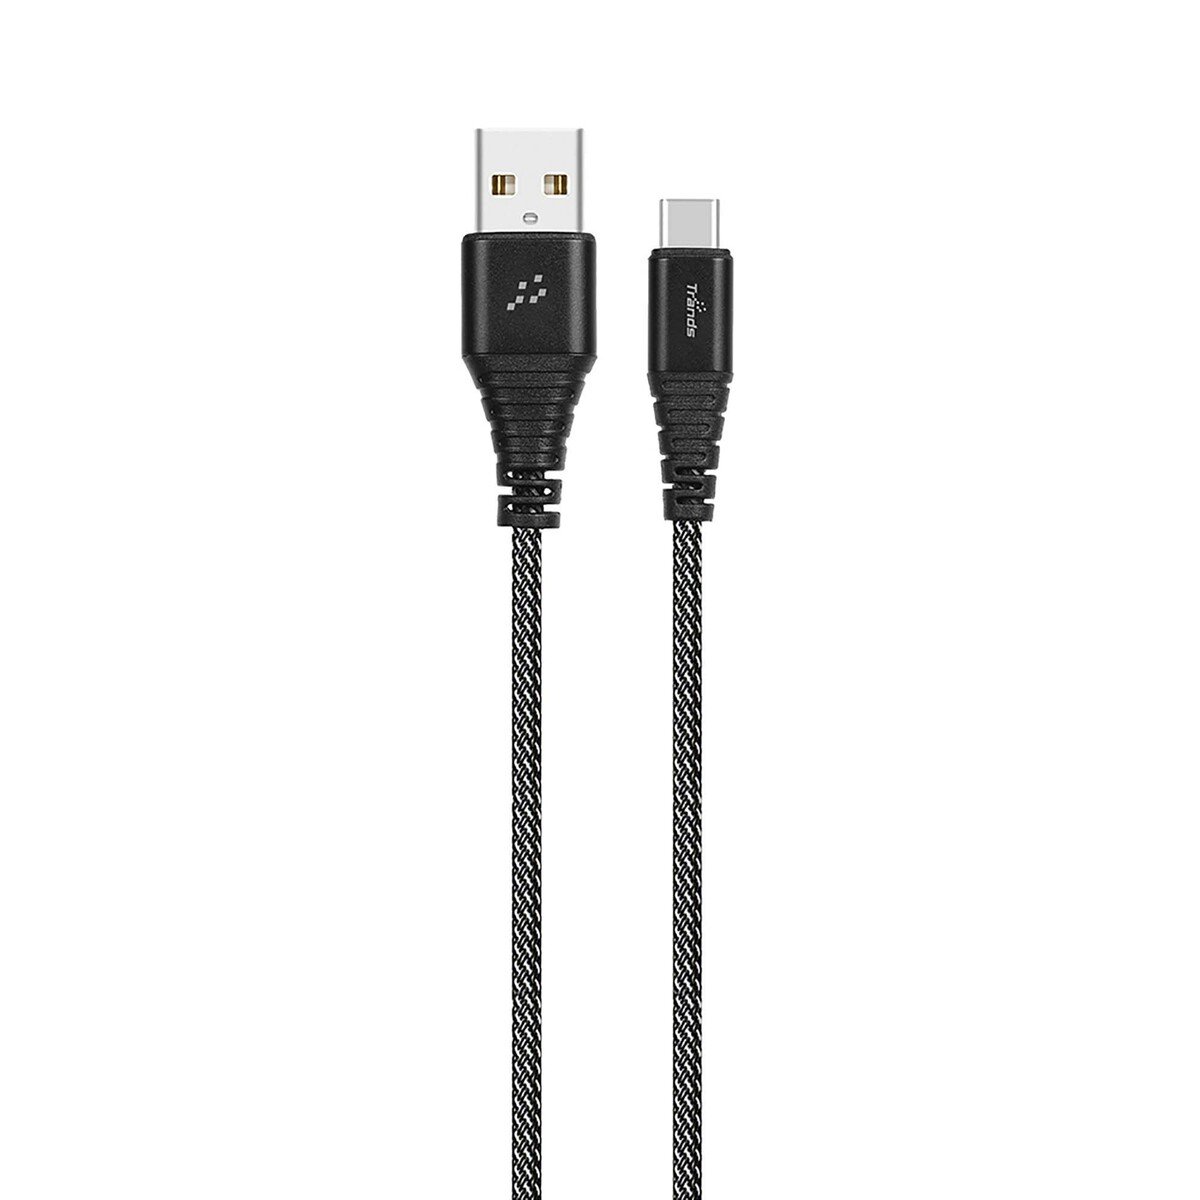 Trands 60W Type-C USB CableCA7893, Black